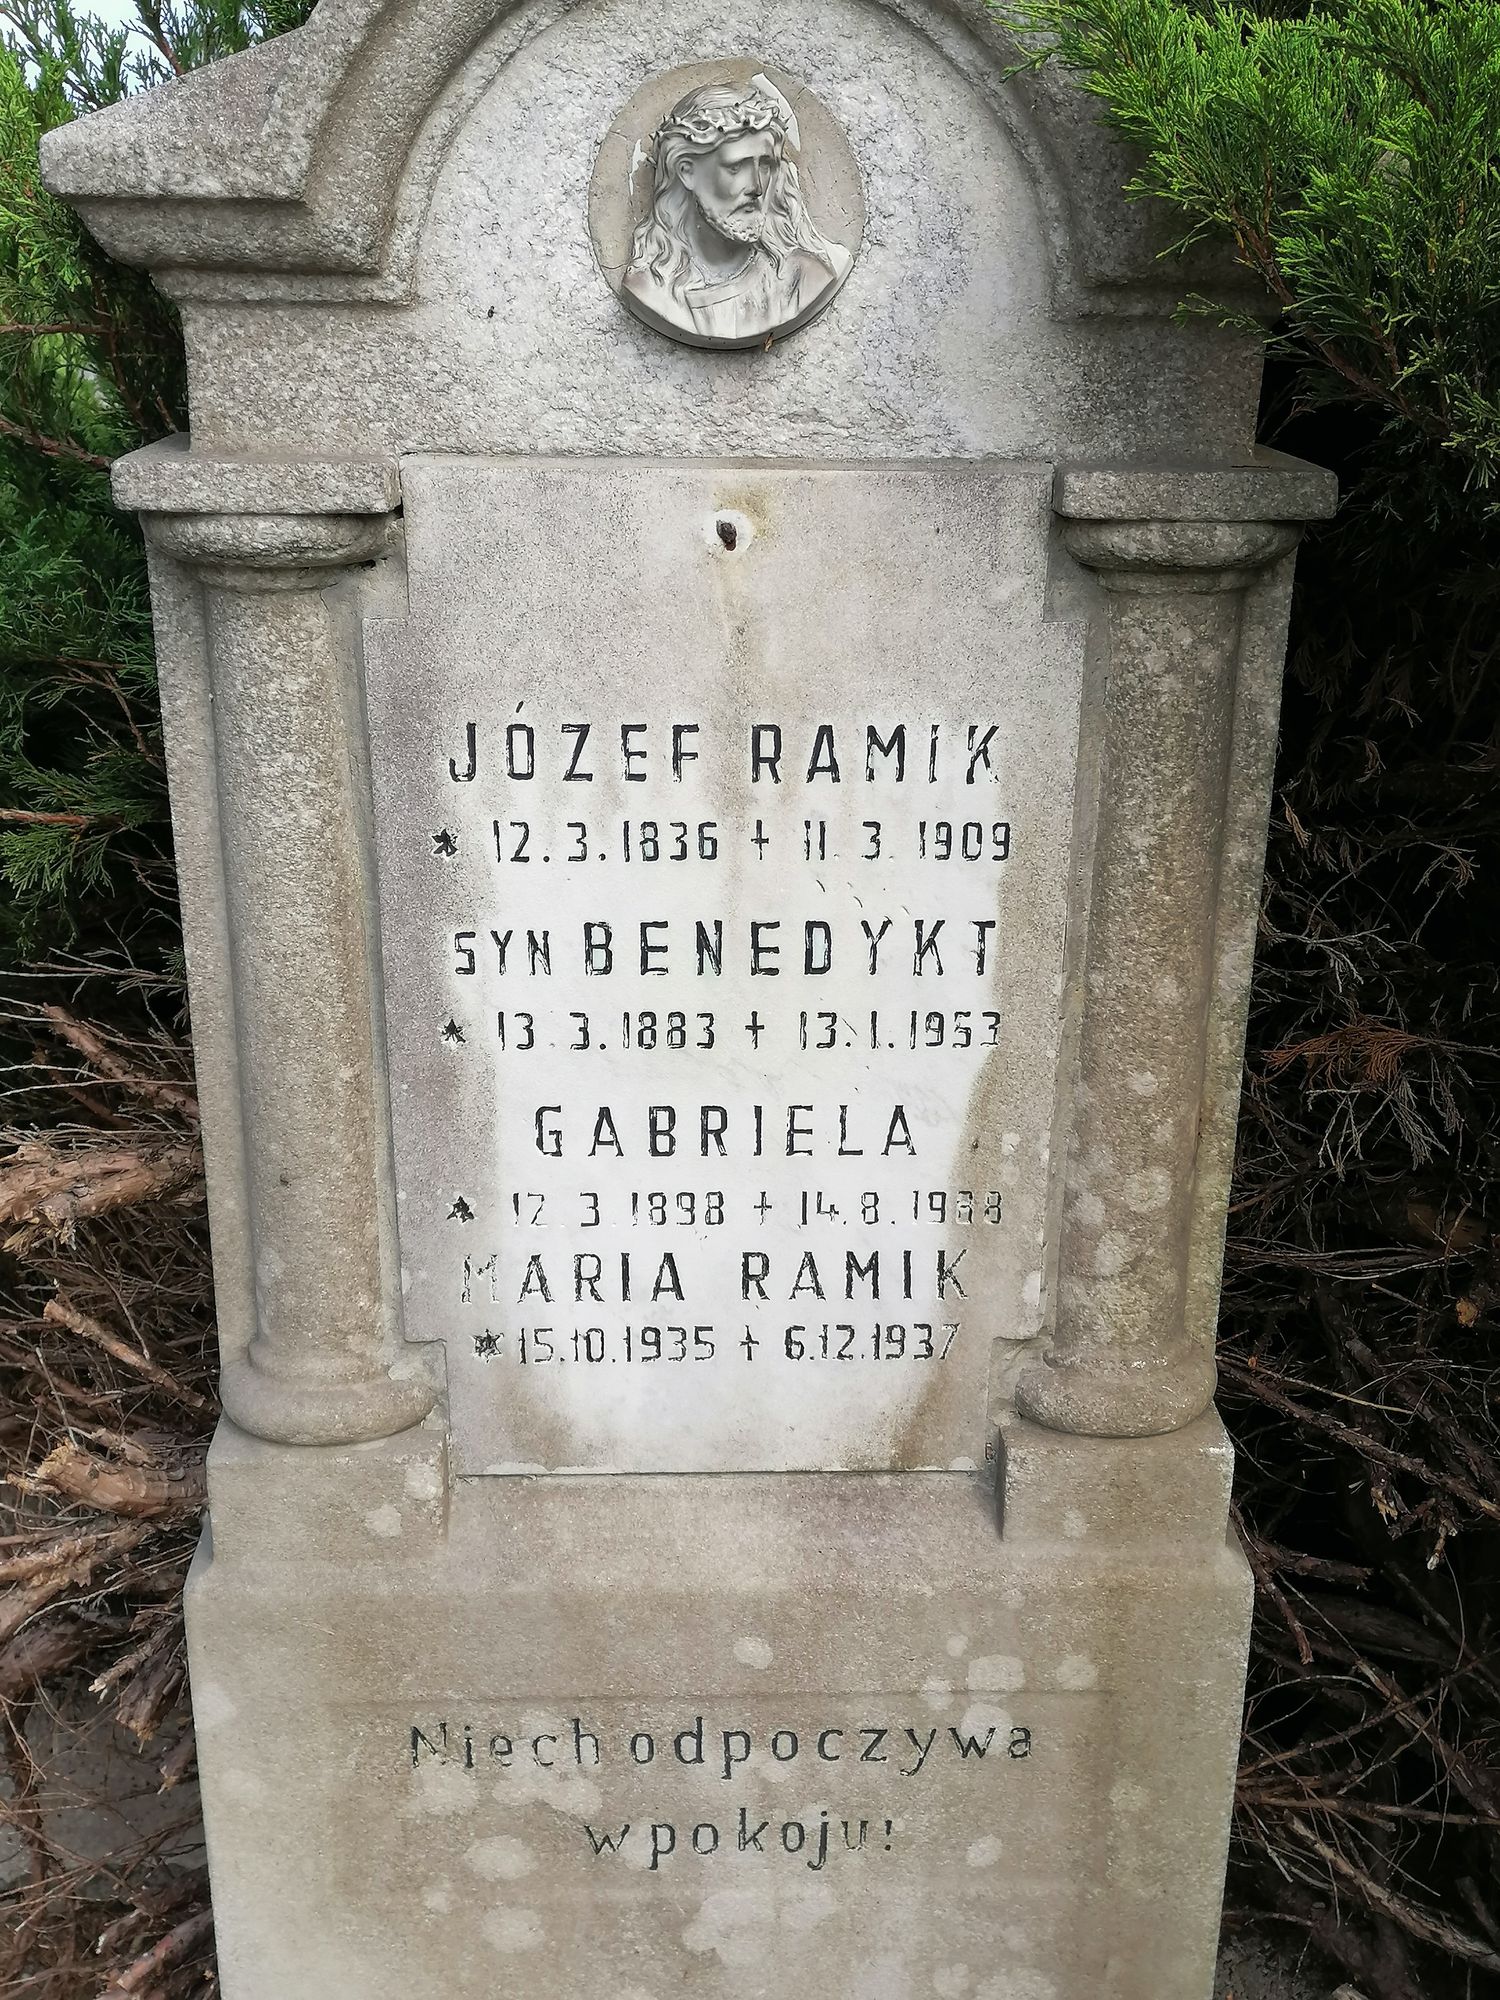 Tombstone of the Ramik family, Karviná Důl cemetery, state 2022